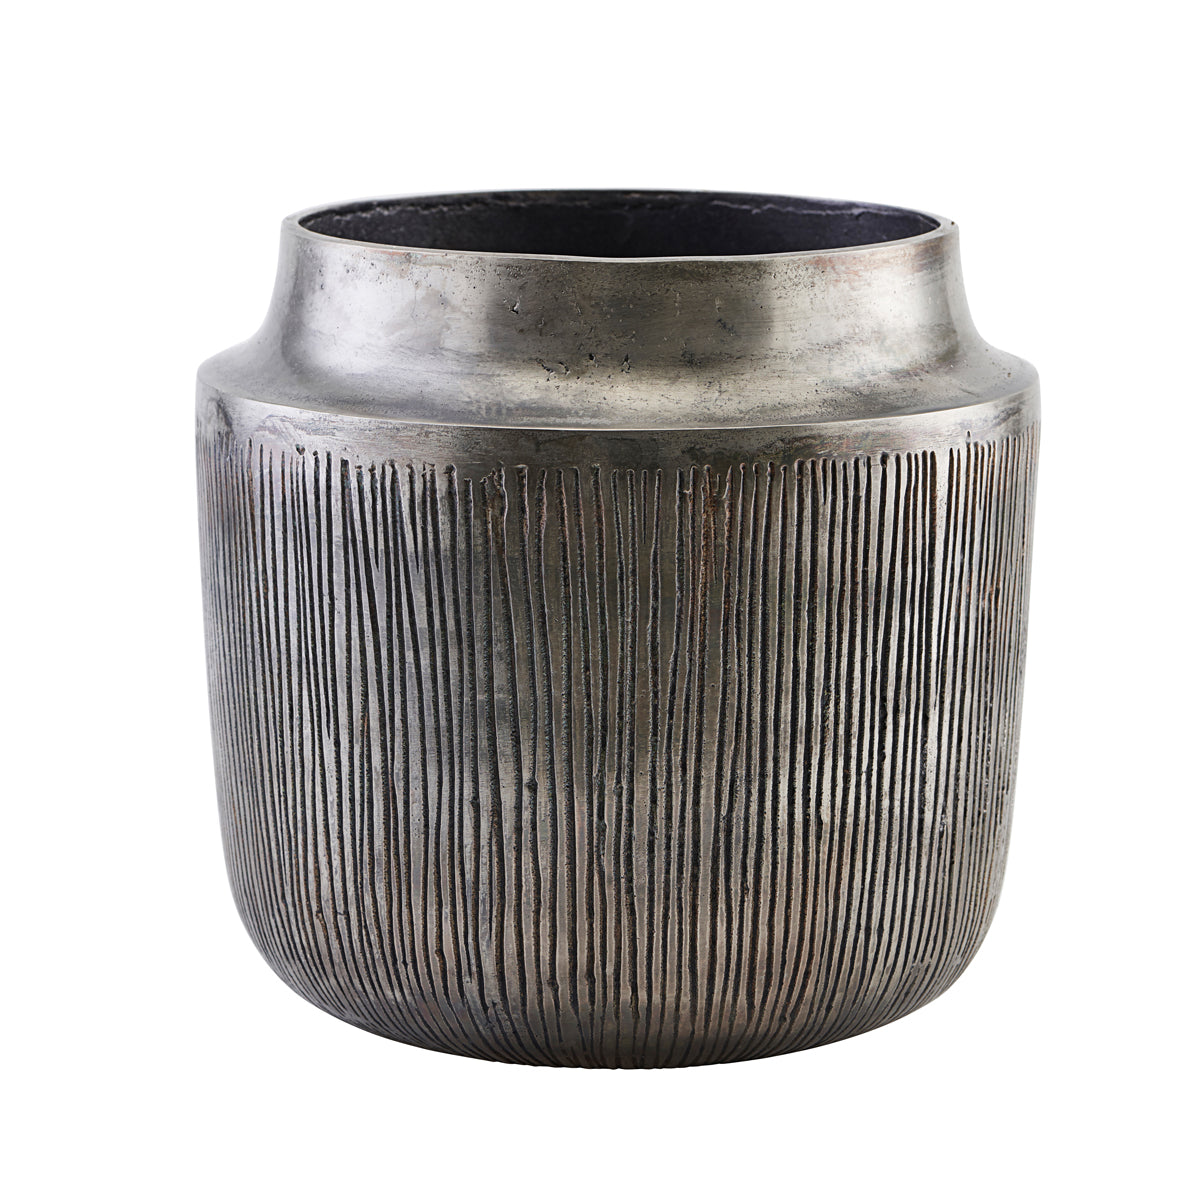 House Doctor Vase/Planter, Heylo, Silver oxidized